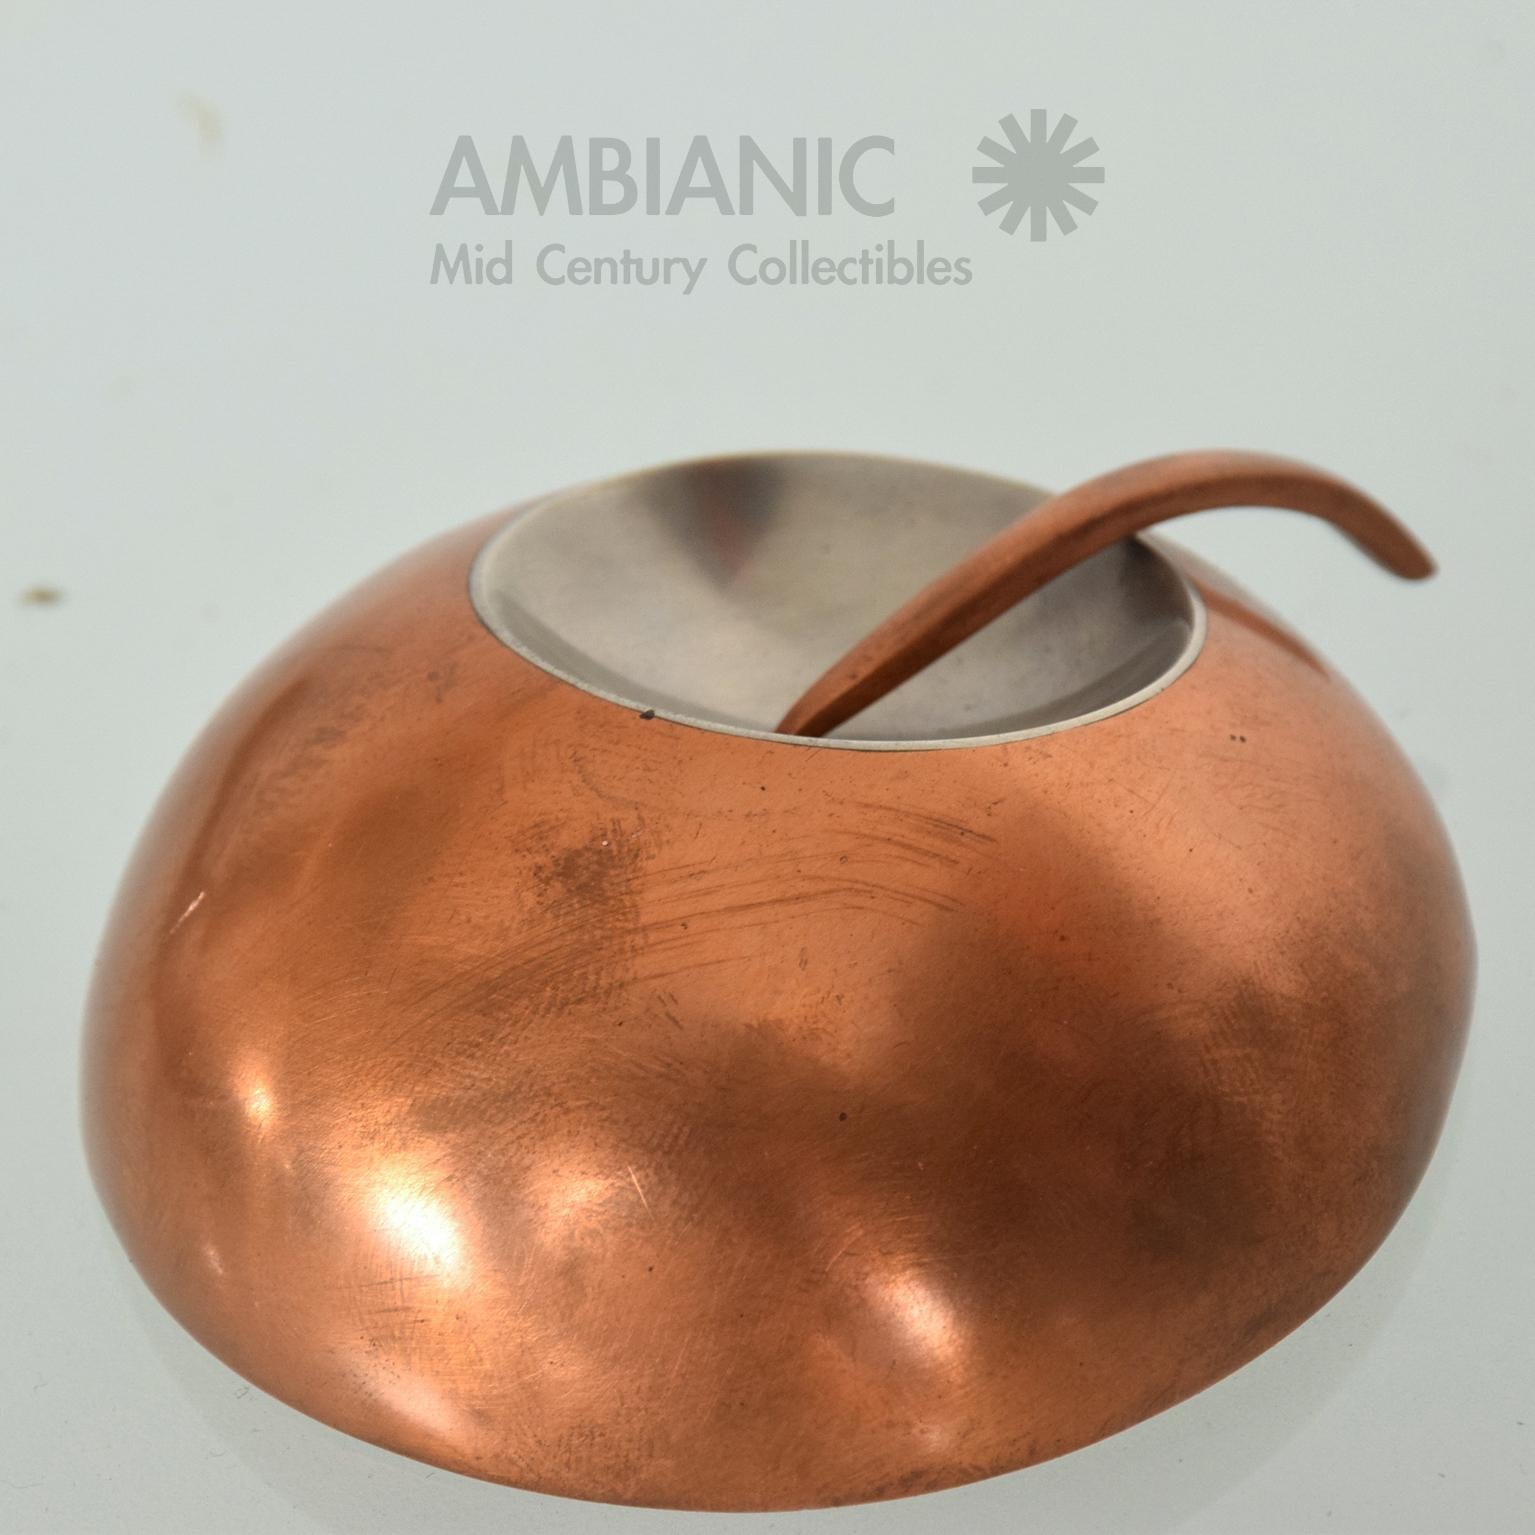 Mid-20th Century  Modernist Metal Art Copper Stainless Steel Brooch After Alexander Calder, 1960s